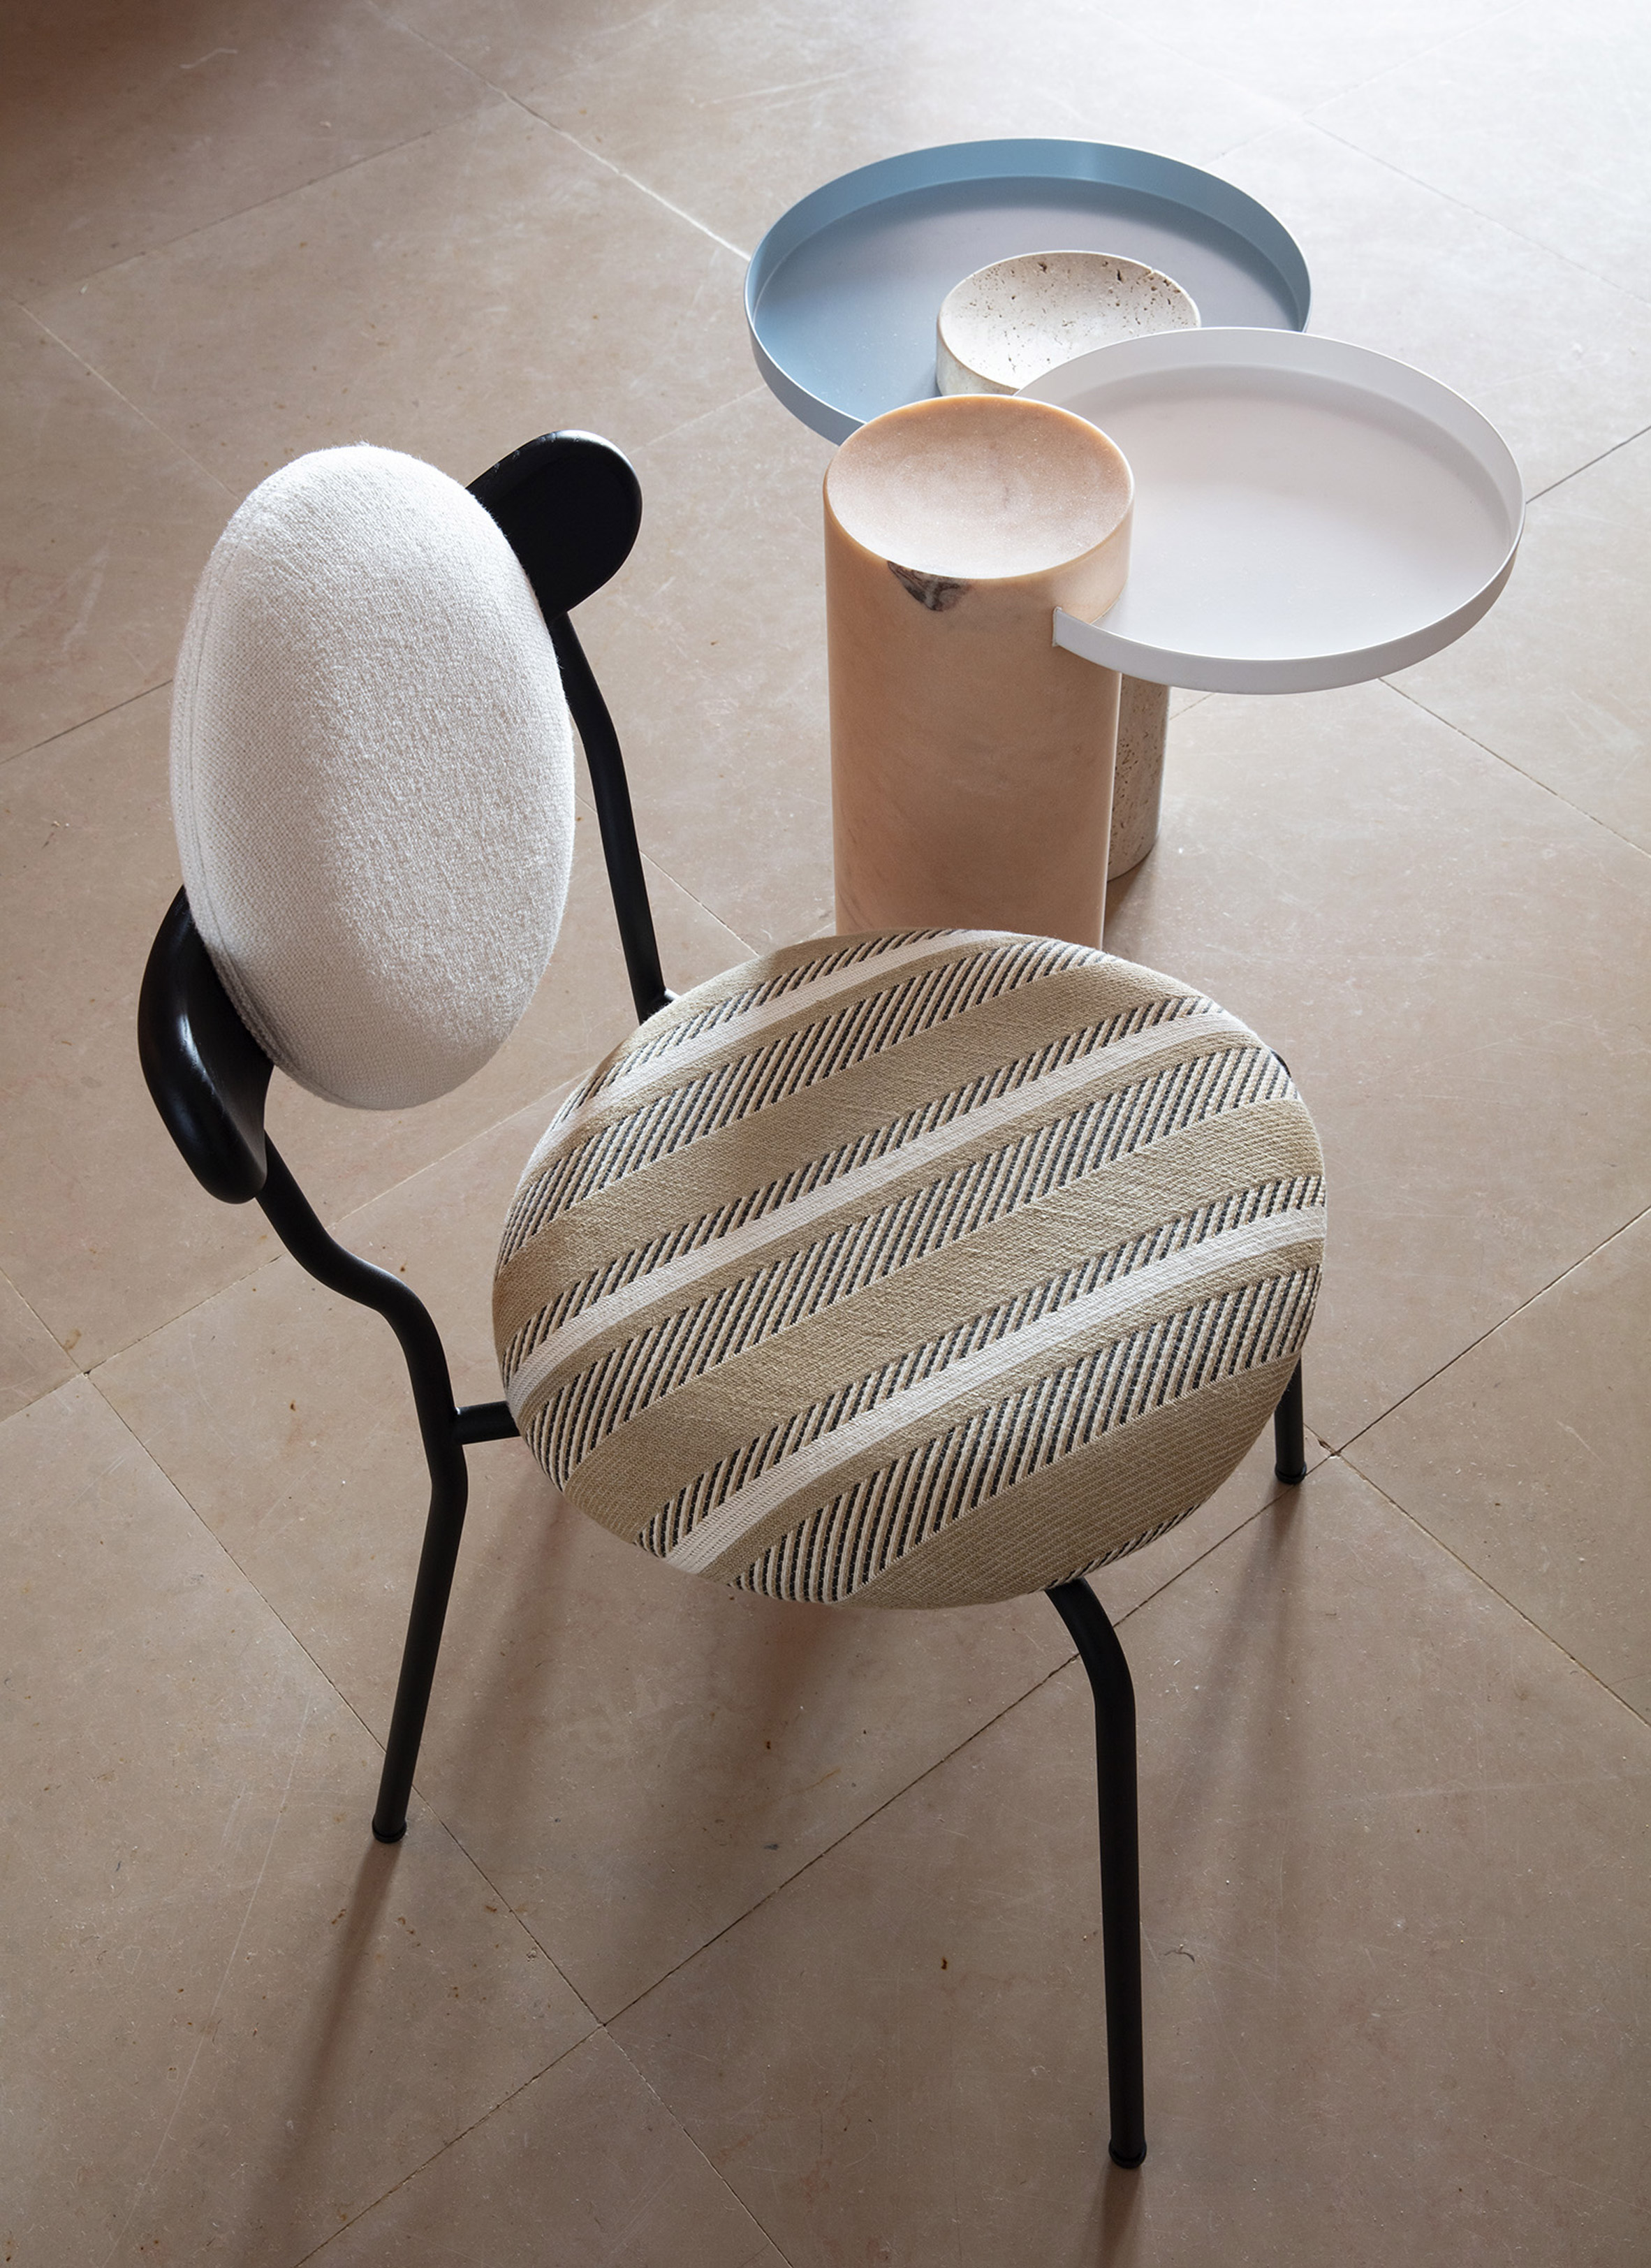 La Chance Presents New Furniture Designs During Maison Objet